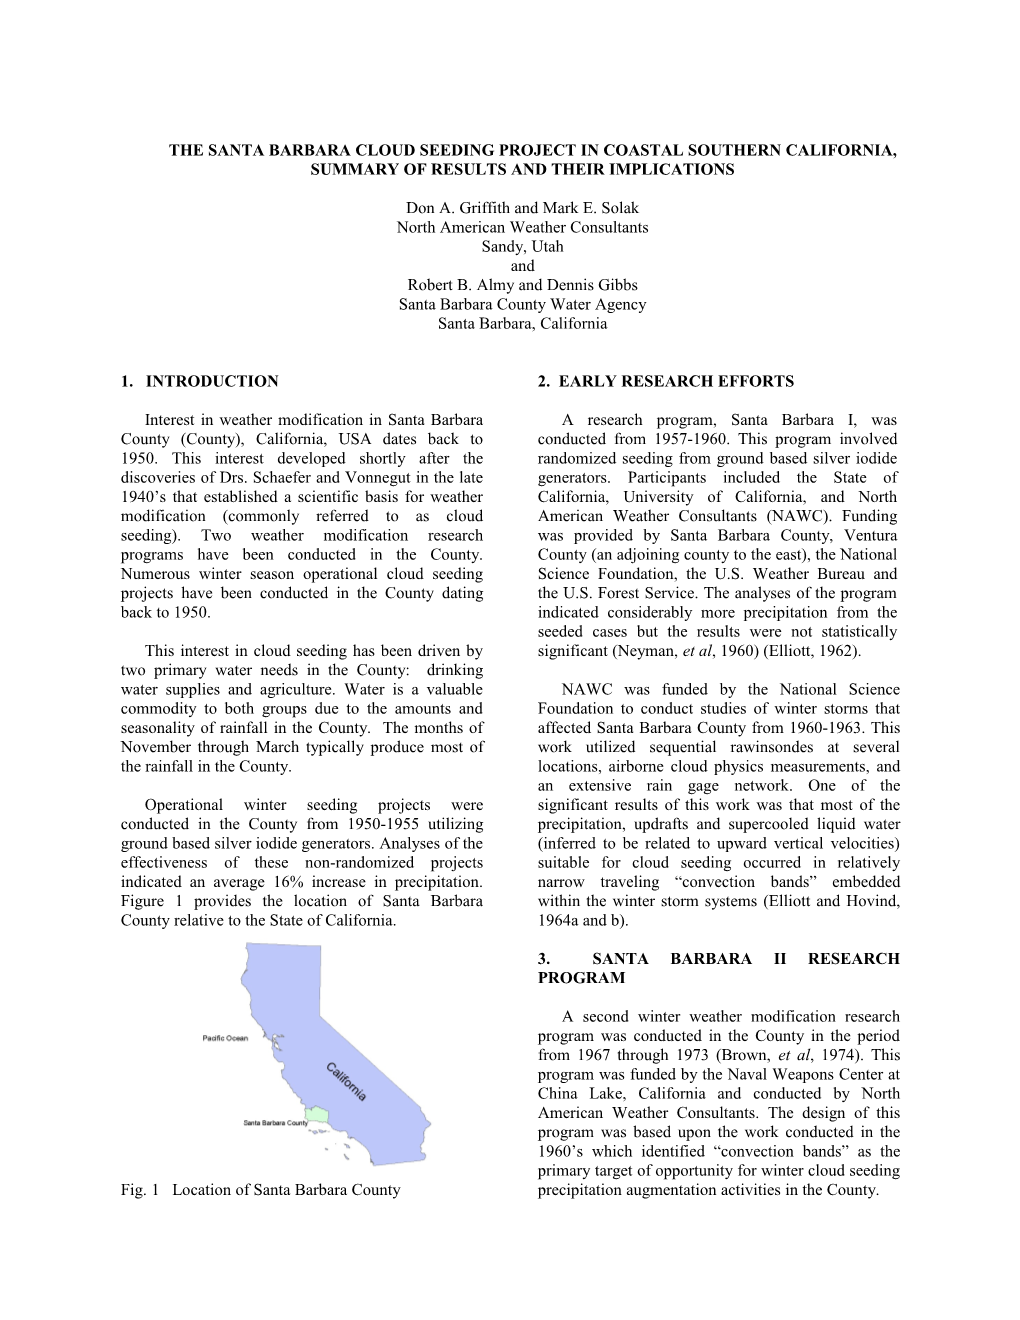 The Santa Barbara Cloud Seeding Project in Coastal Southern California, USA